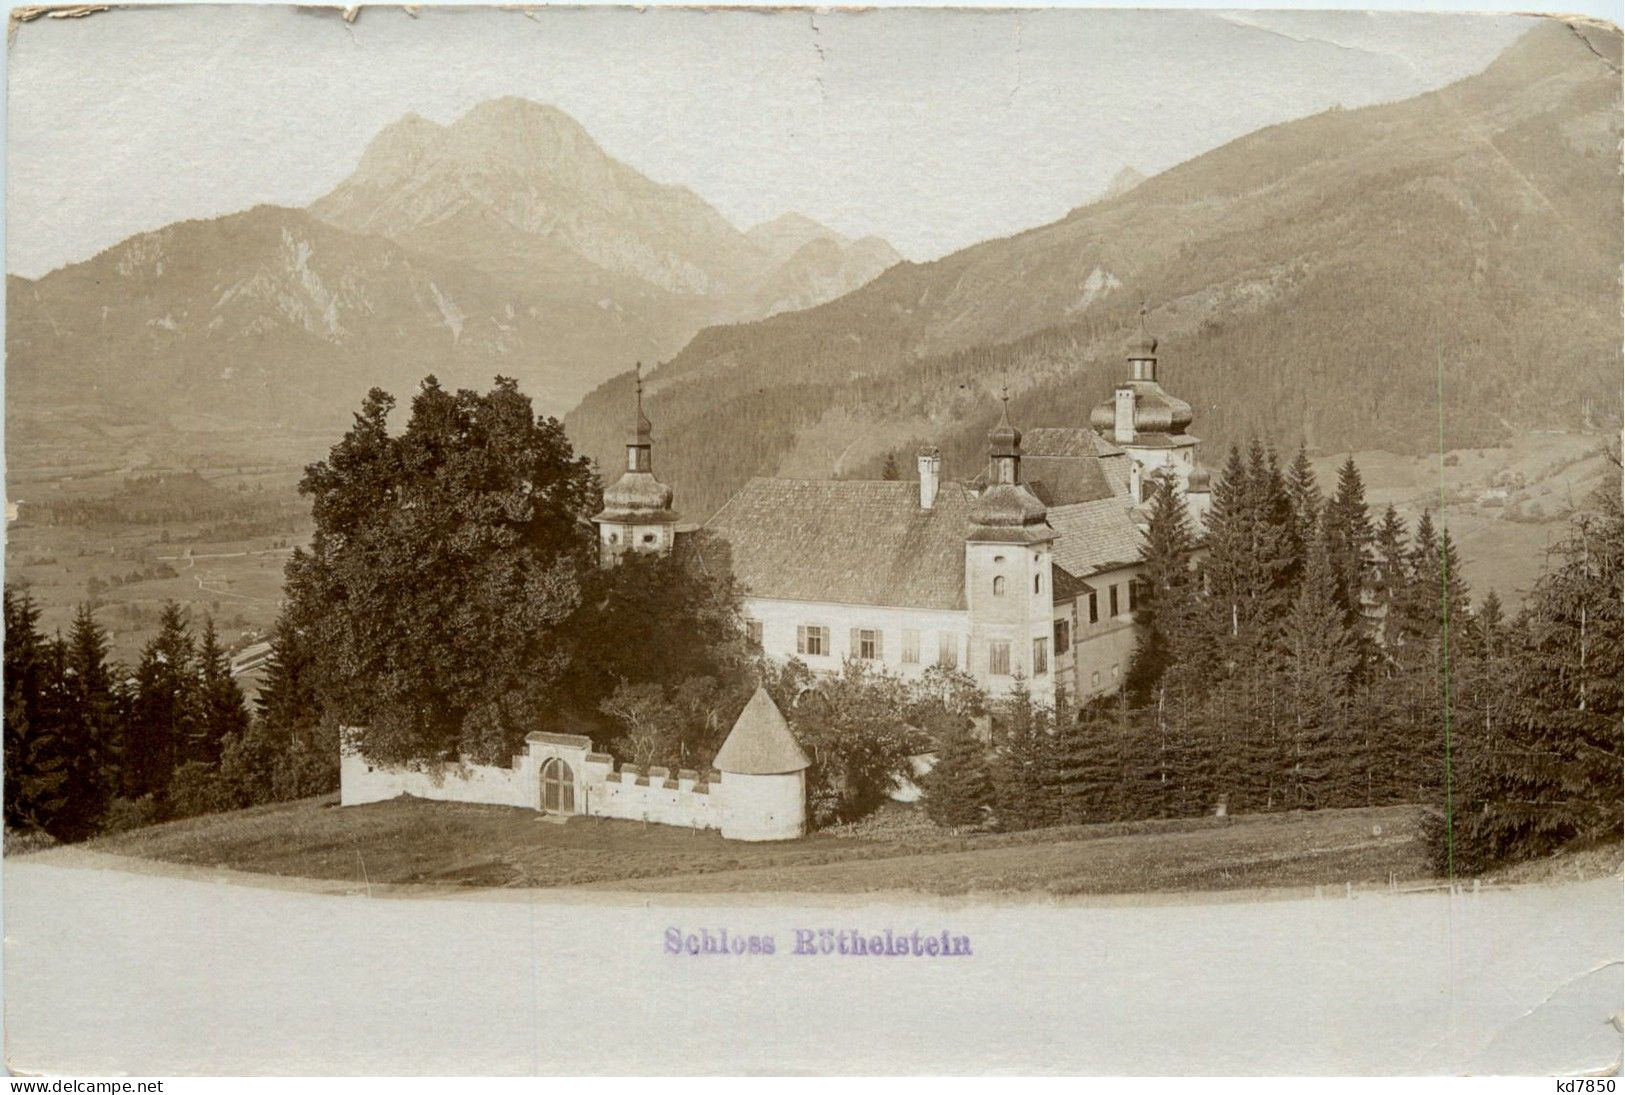 Admont/Steiermark - Admont, Schloss Röthelstein - Admont